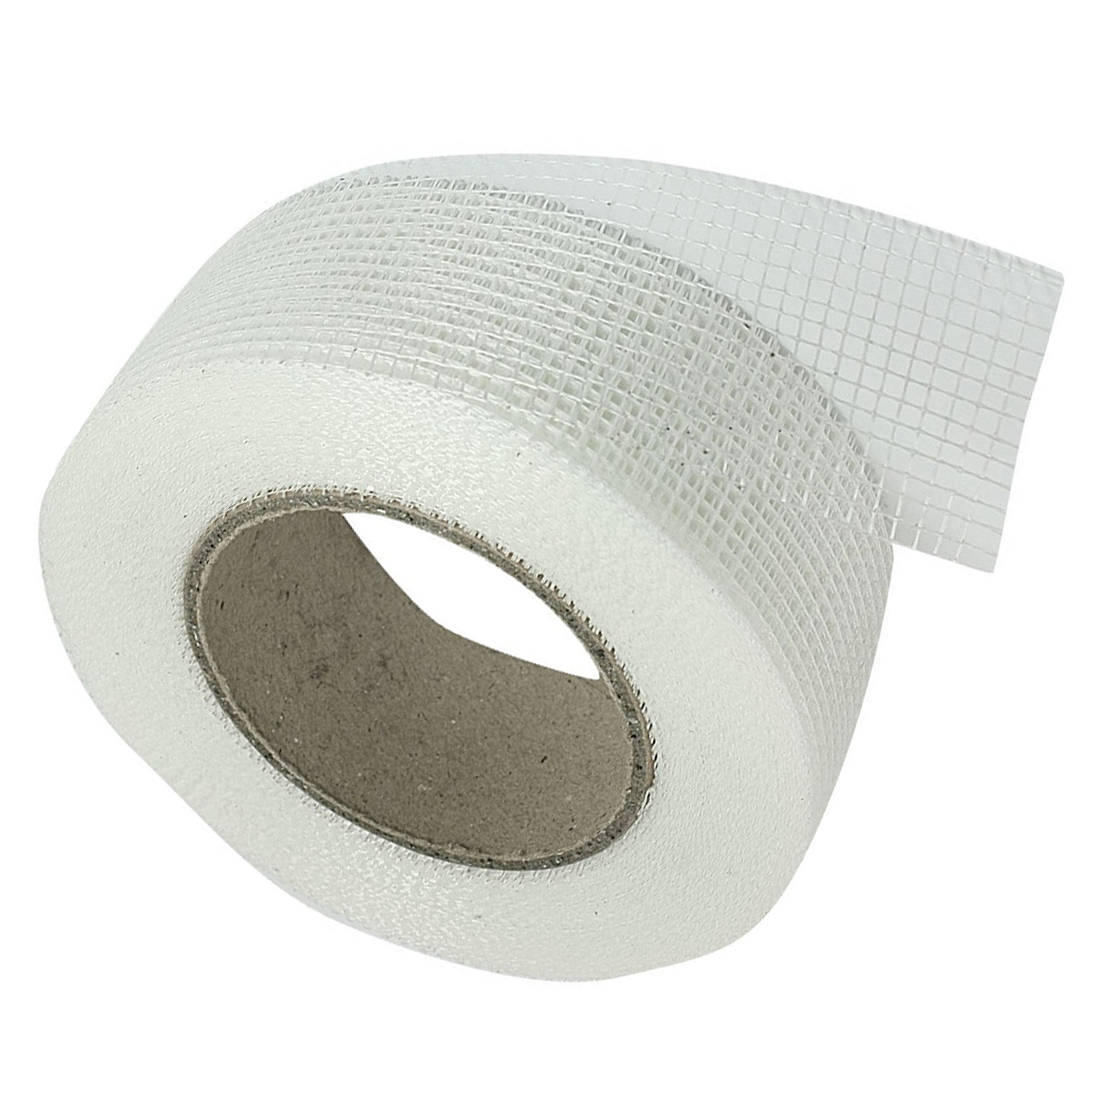 Top quality Self-adhesive white fiberglass mesh tape for cracks holes